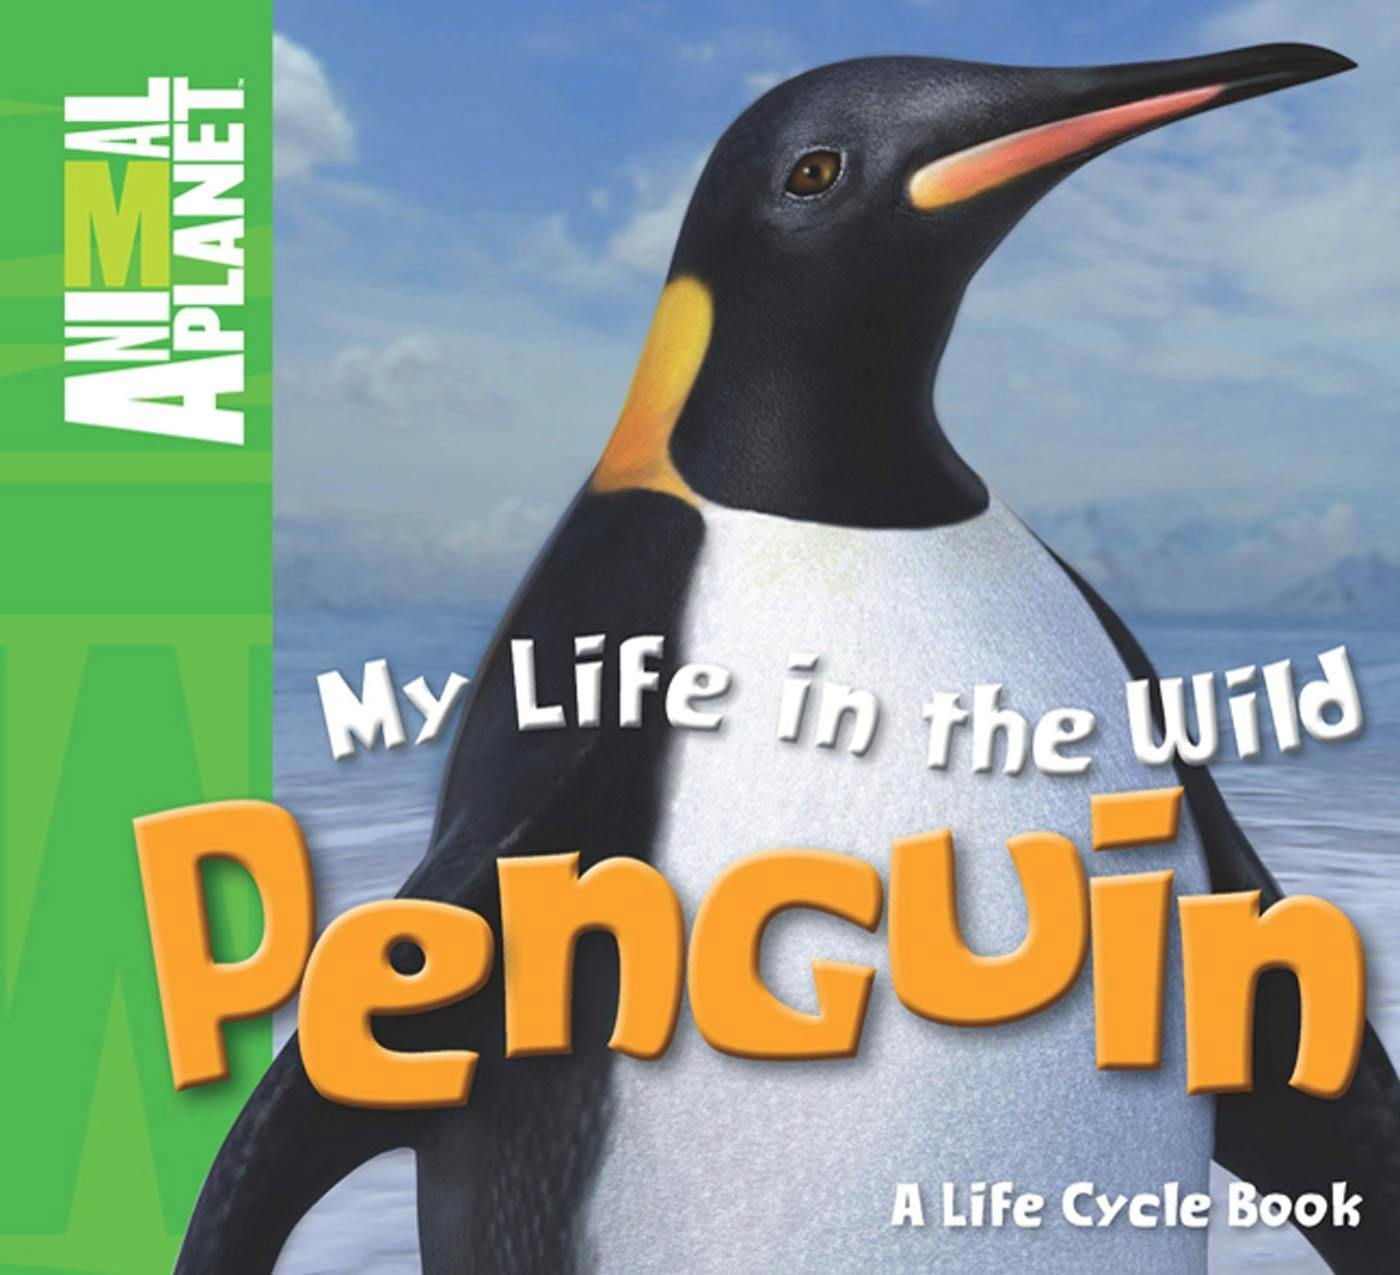 My Life in the Wild: Penguin